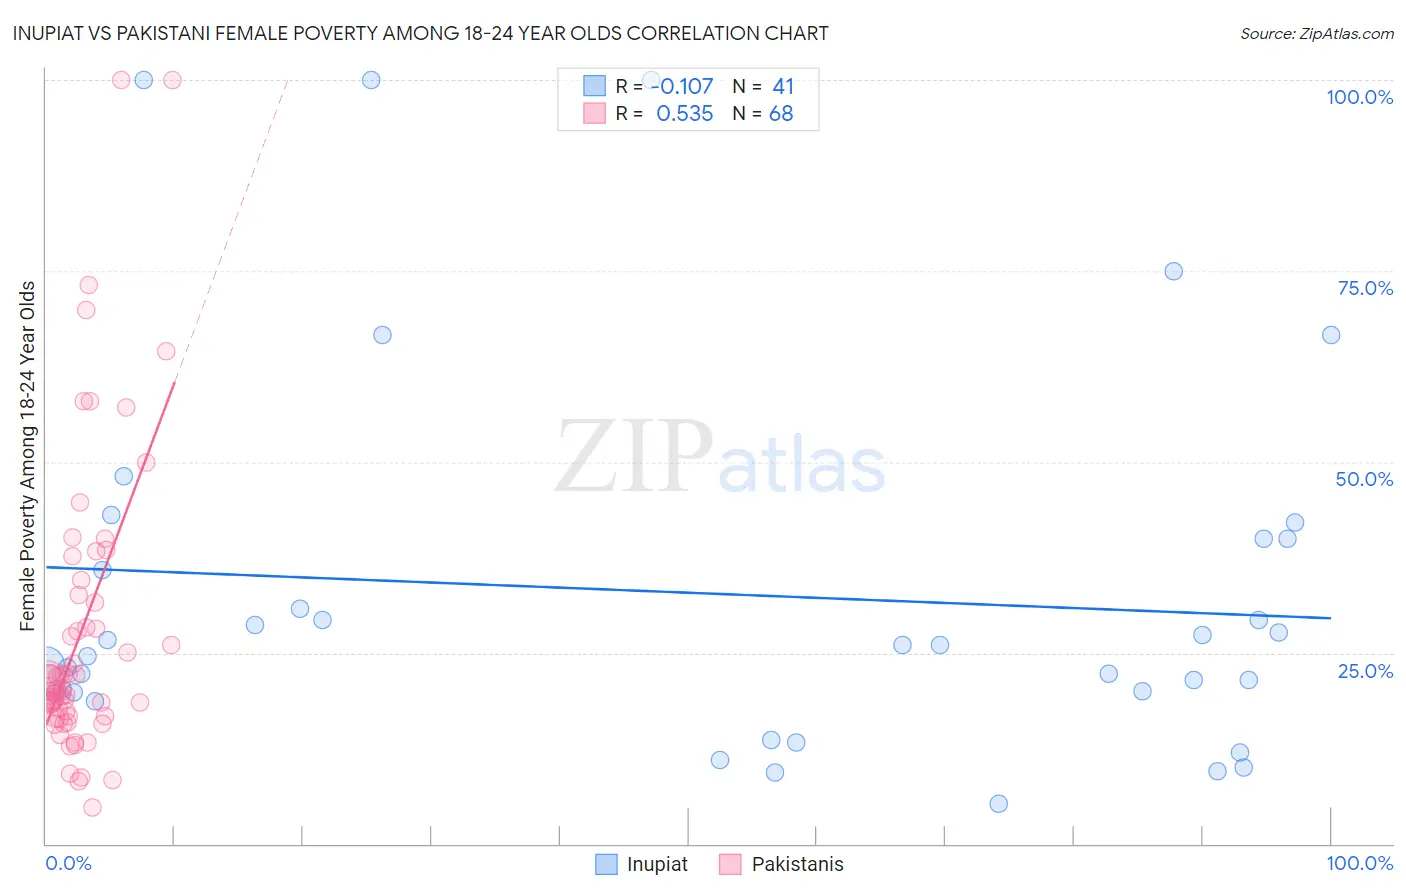 Inupiat vs Pakistani Female Poverty Among 18-24 Year Olds